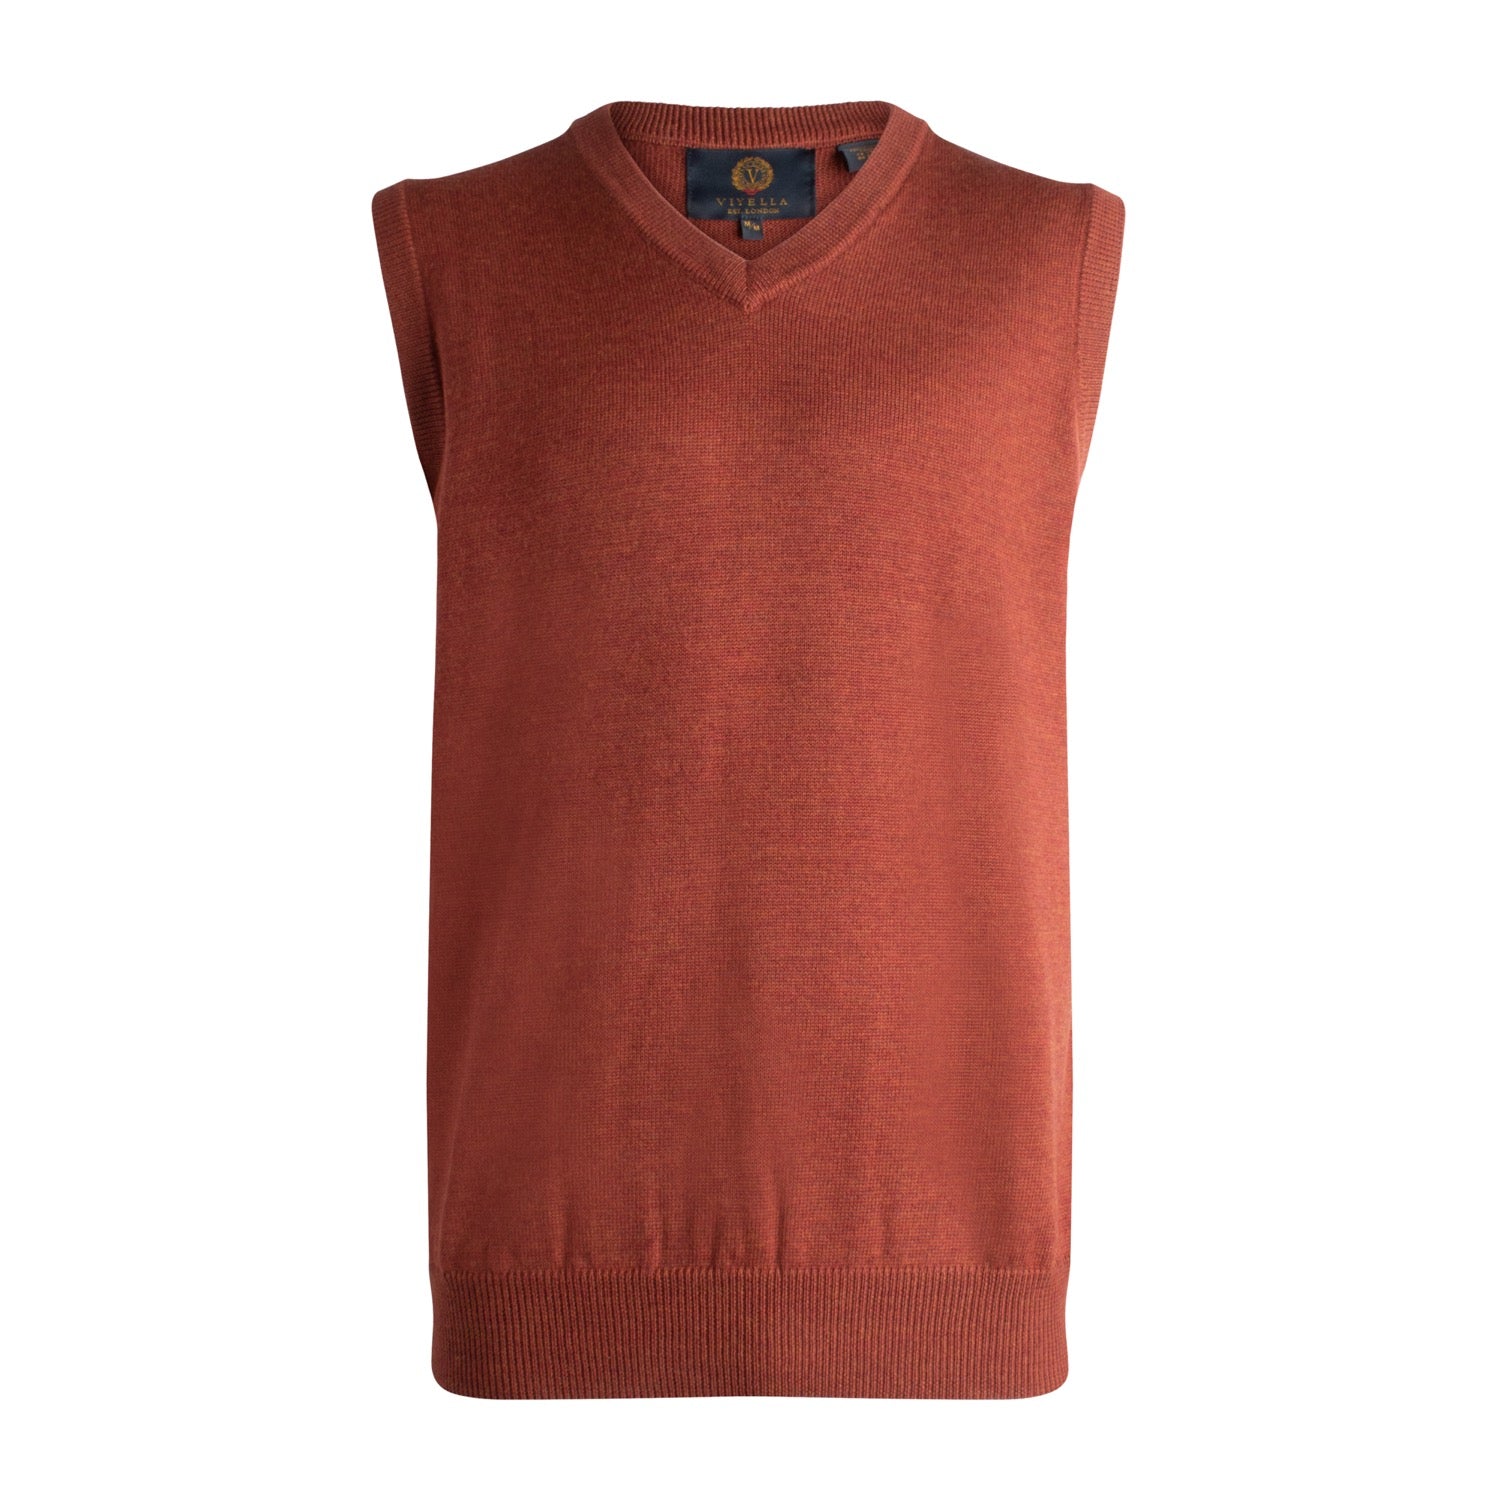 Extra Fine 'Zegna Baruffa' Merino Wool V-Neck Sleeveless Sweater Vest in Rust by Viyella